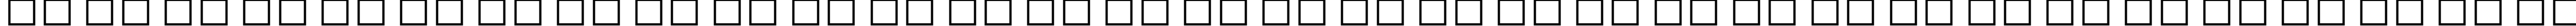 Пример написания русского алфавита шрифтом Bodoni MT Condensed Bold Italic